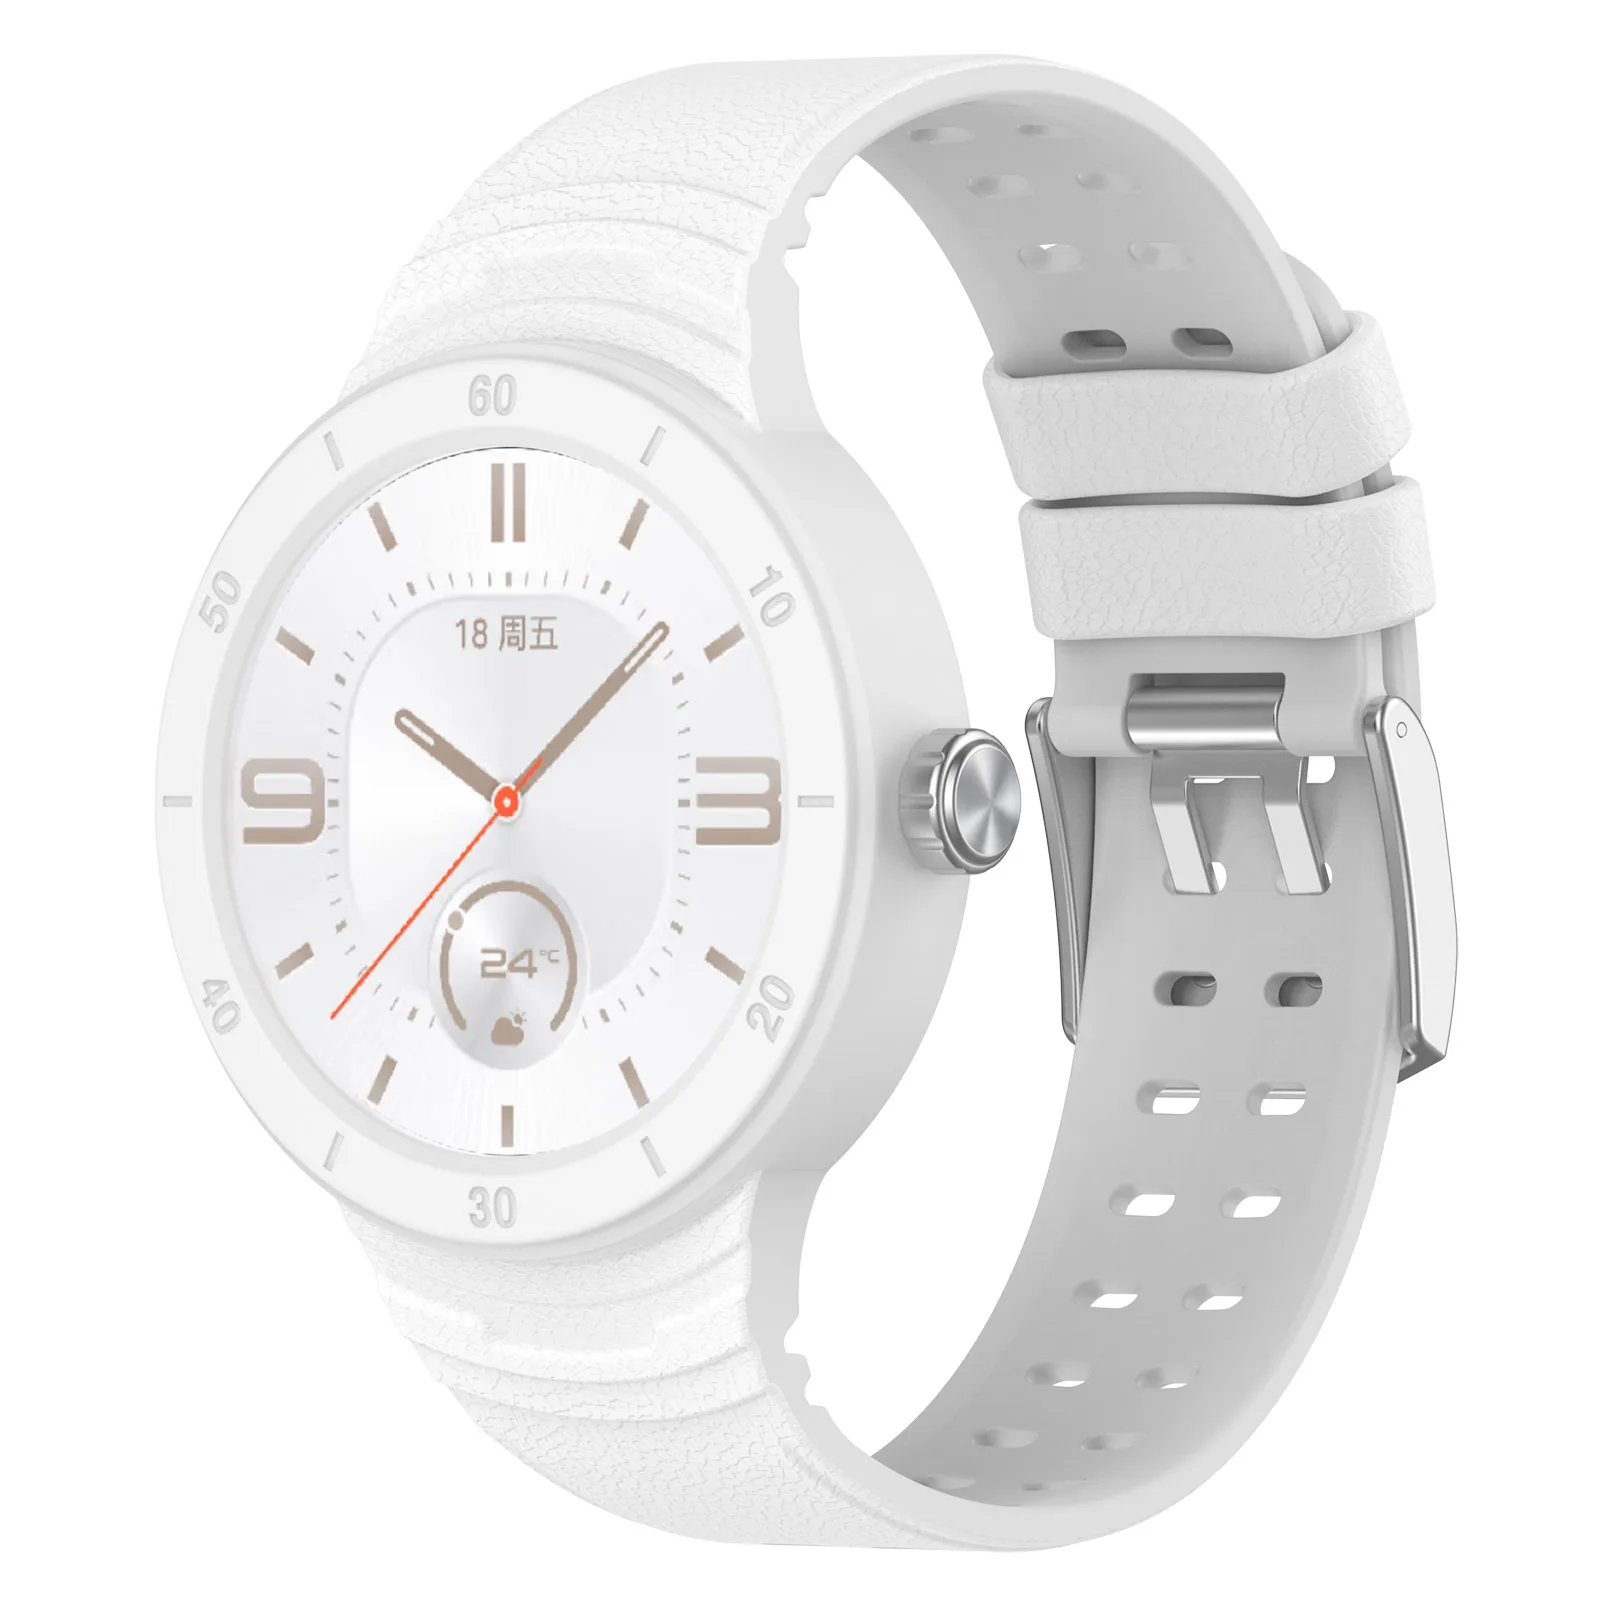 Heroland סיליקון רצועה עבור Huawei לצפות GT סייבר שעון חכם רצועת שעון+מעטפת הגנה חלופי צמיד אביזרי כיסוי